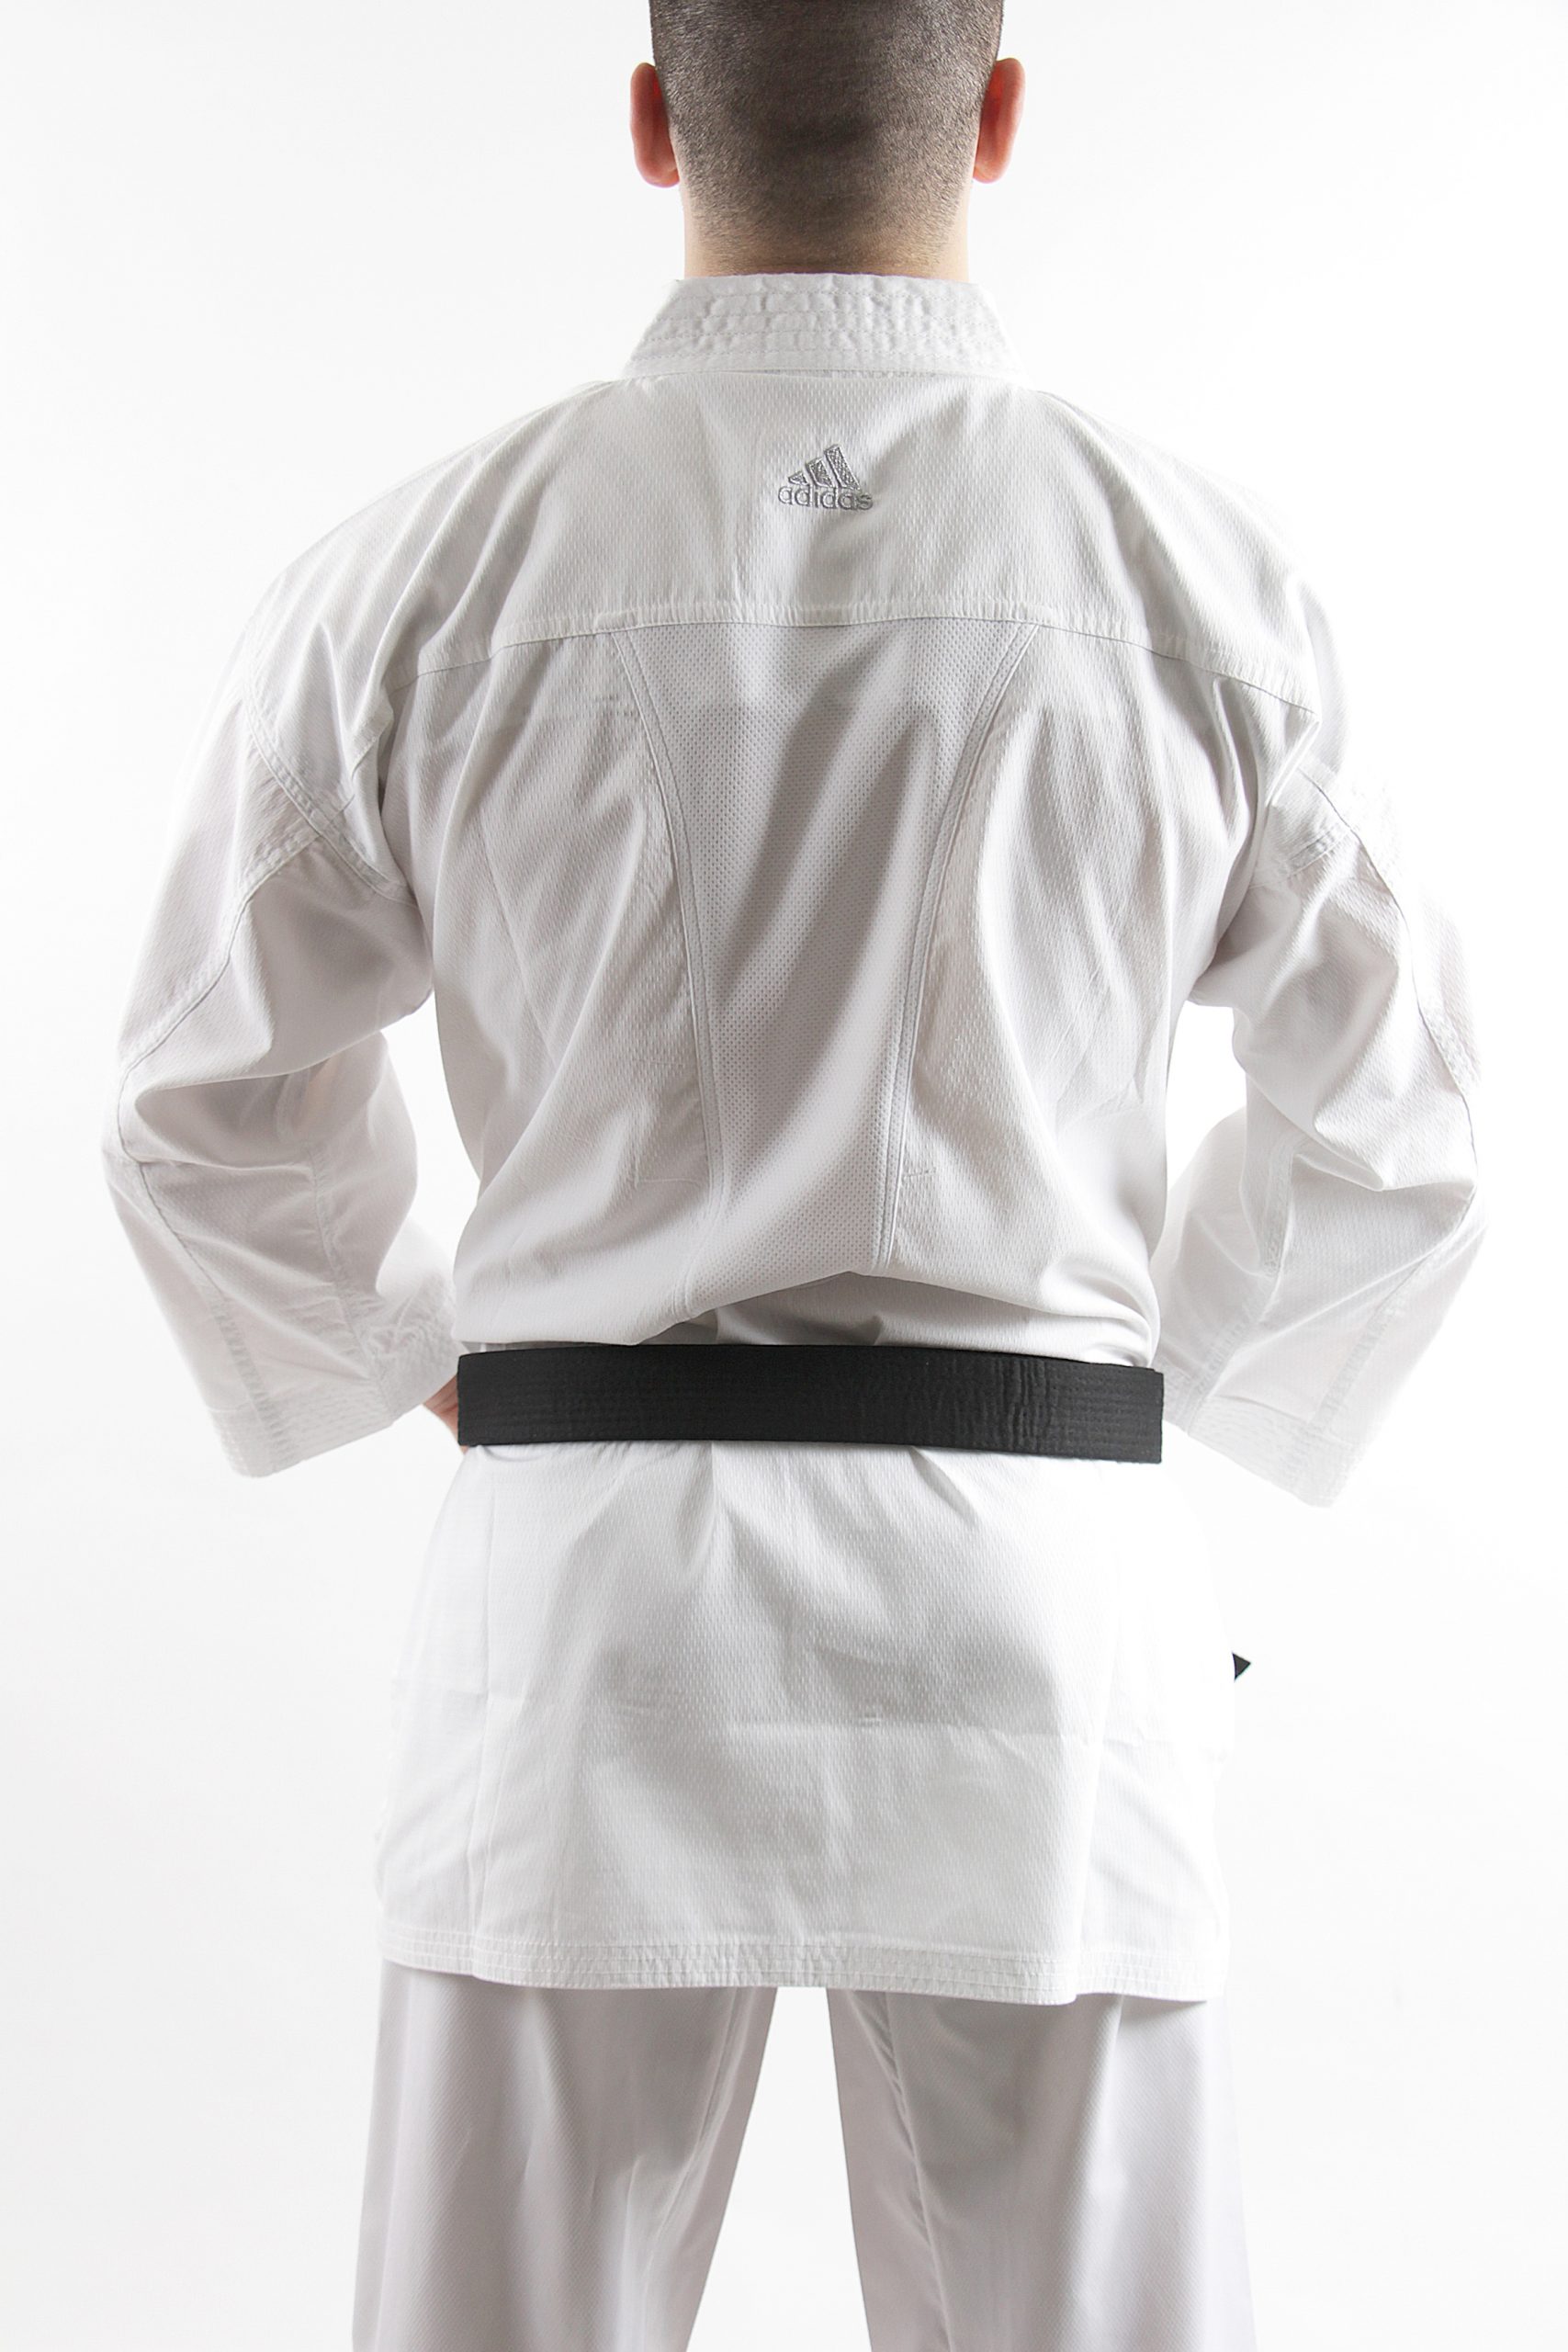 Karategi Adidas KUMITE - Indumentaria para artes marciales